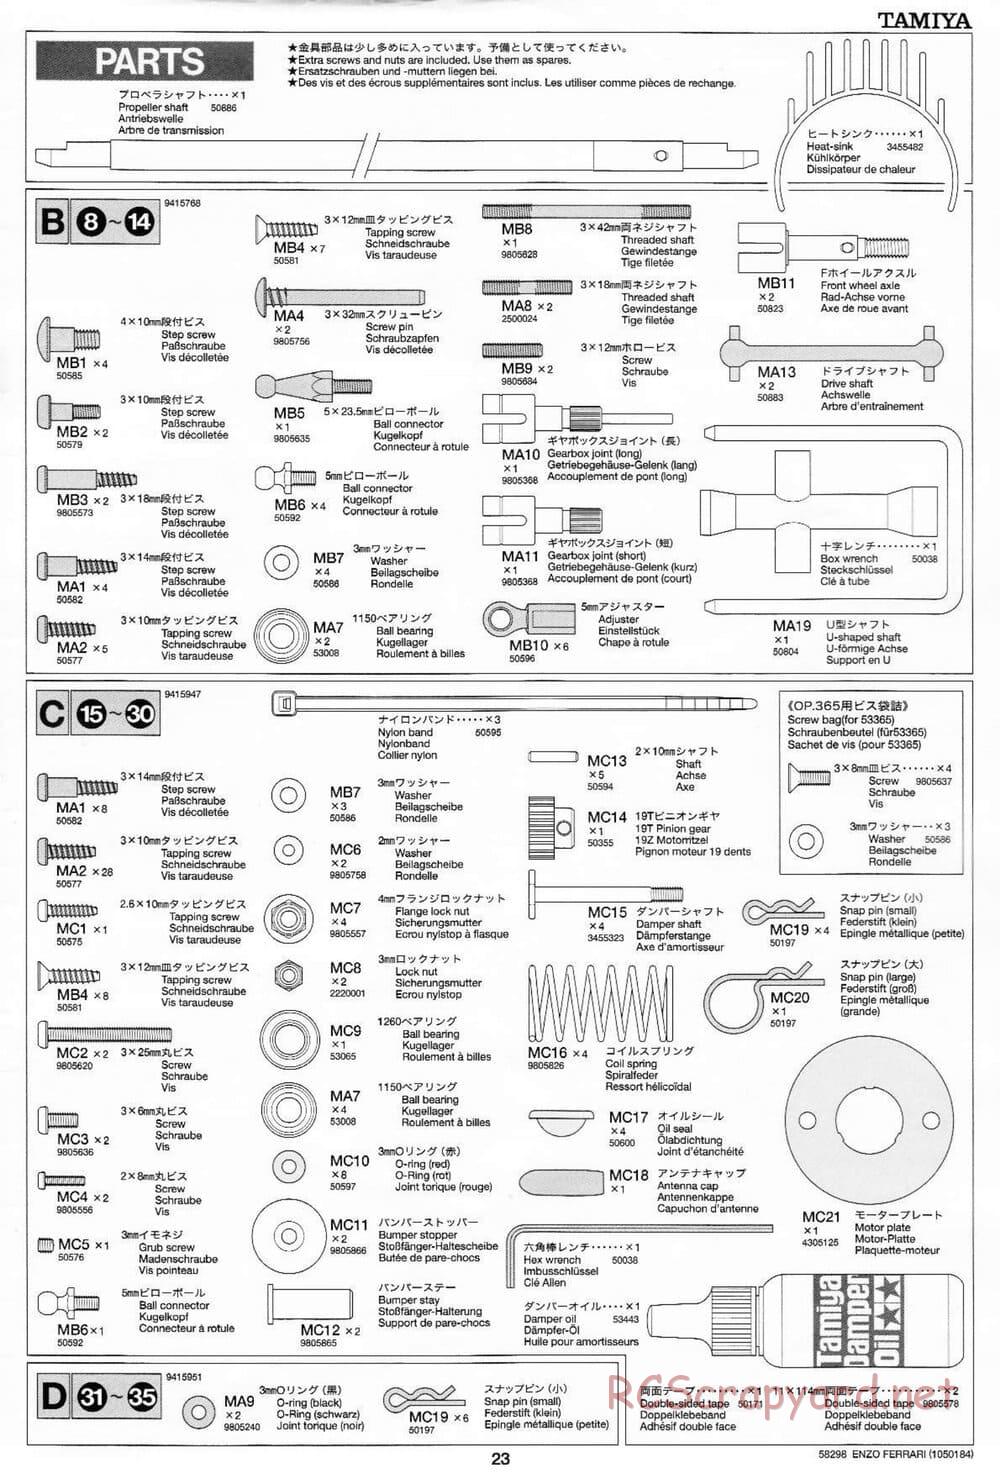 Tamiya - Enzo Ferrari - TB-01 Chassis - Manual - Page 23